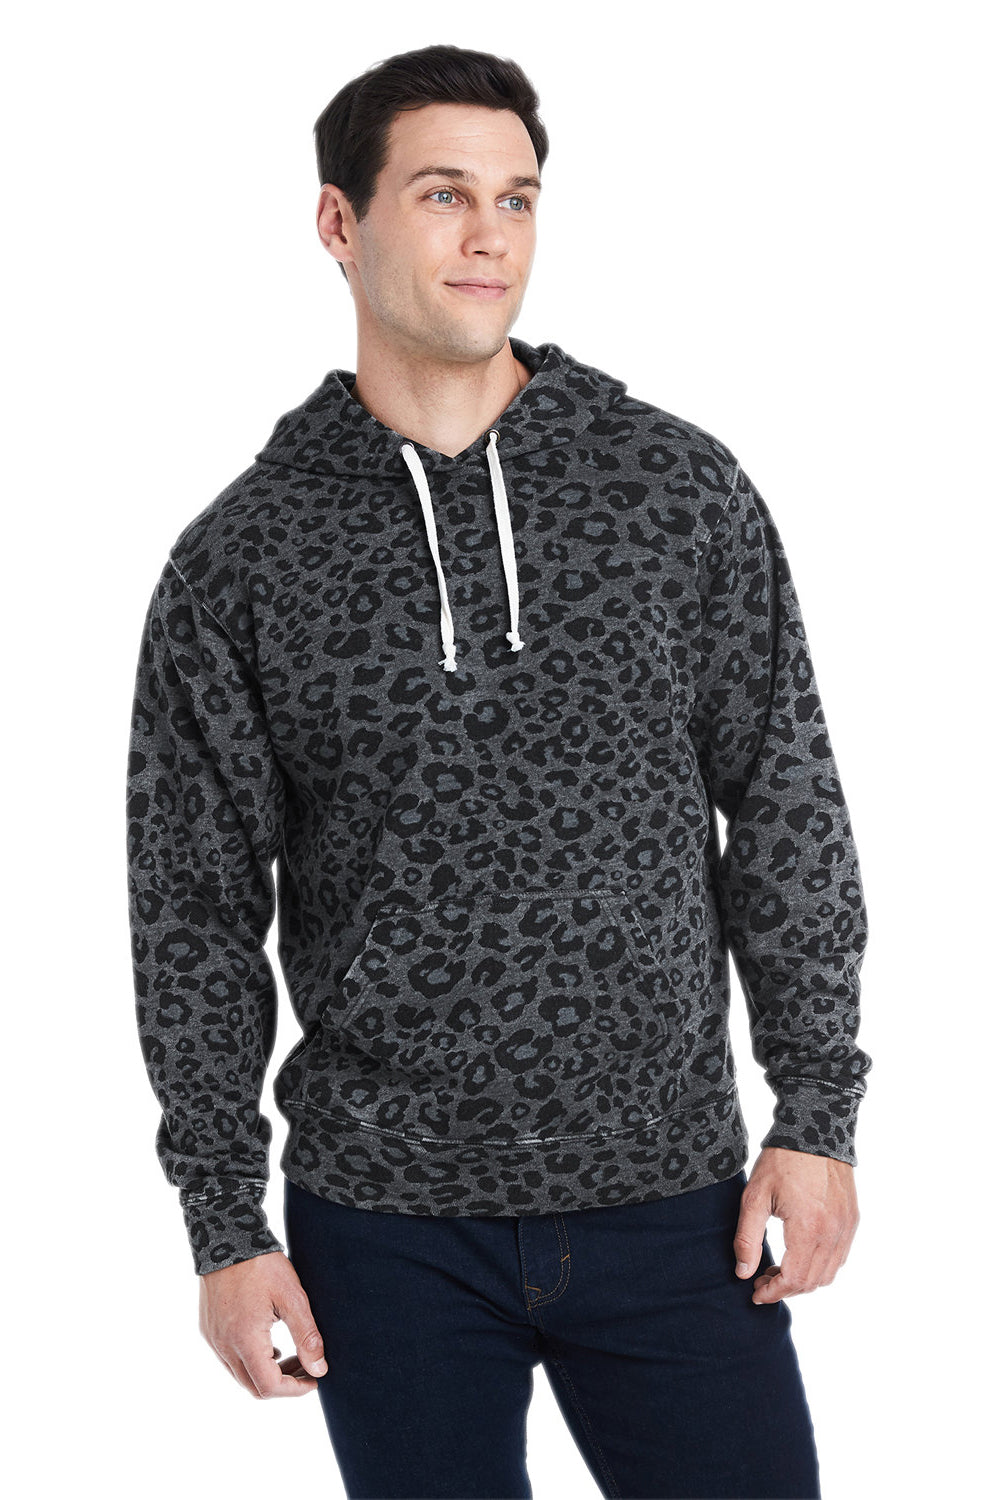 J America JA8871/8871 Mens Fleece Hooded Sweatshirt Hoodie Black Leopard Front